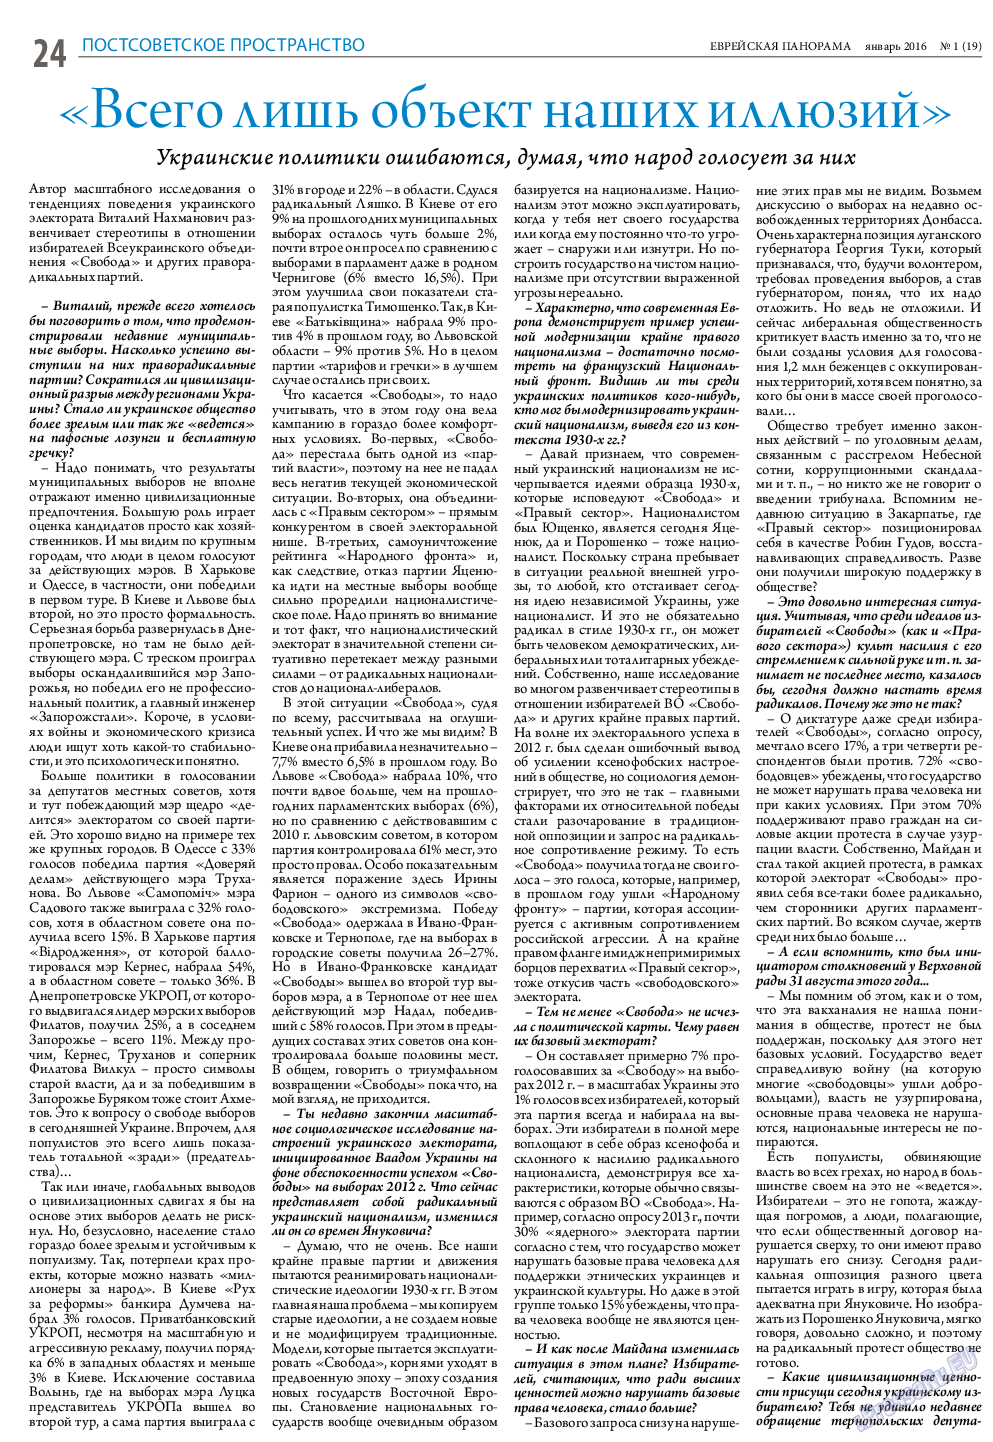 Еврейская панорама, газета. 2016 №1 стр.24